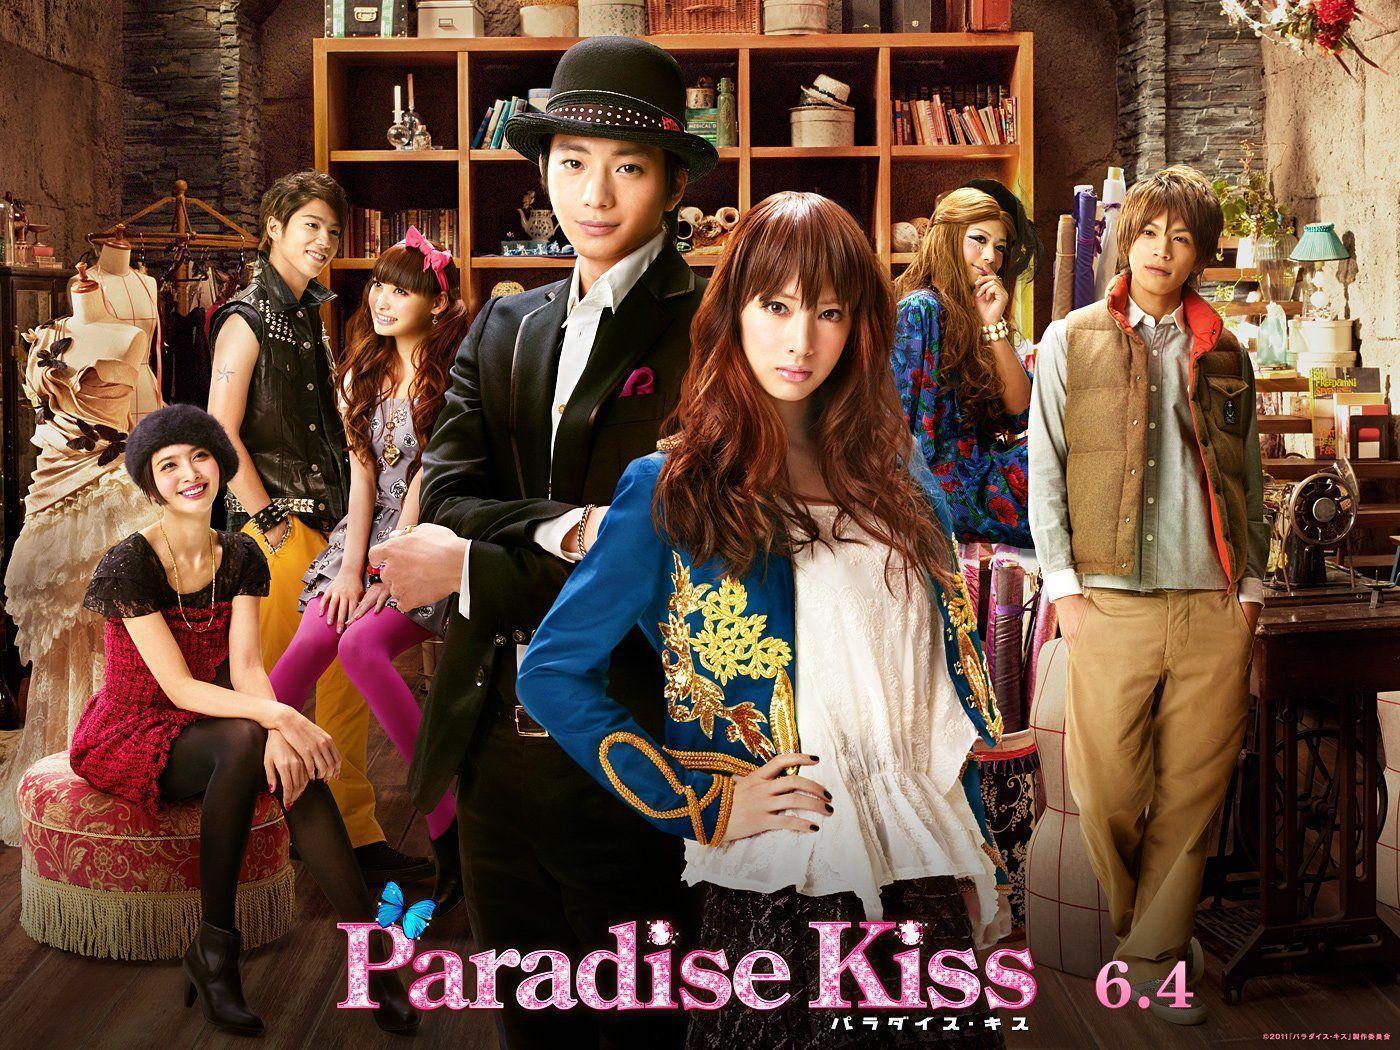 Paradise Kiss Wallpaper